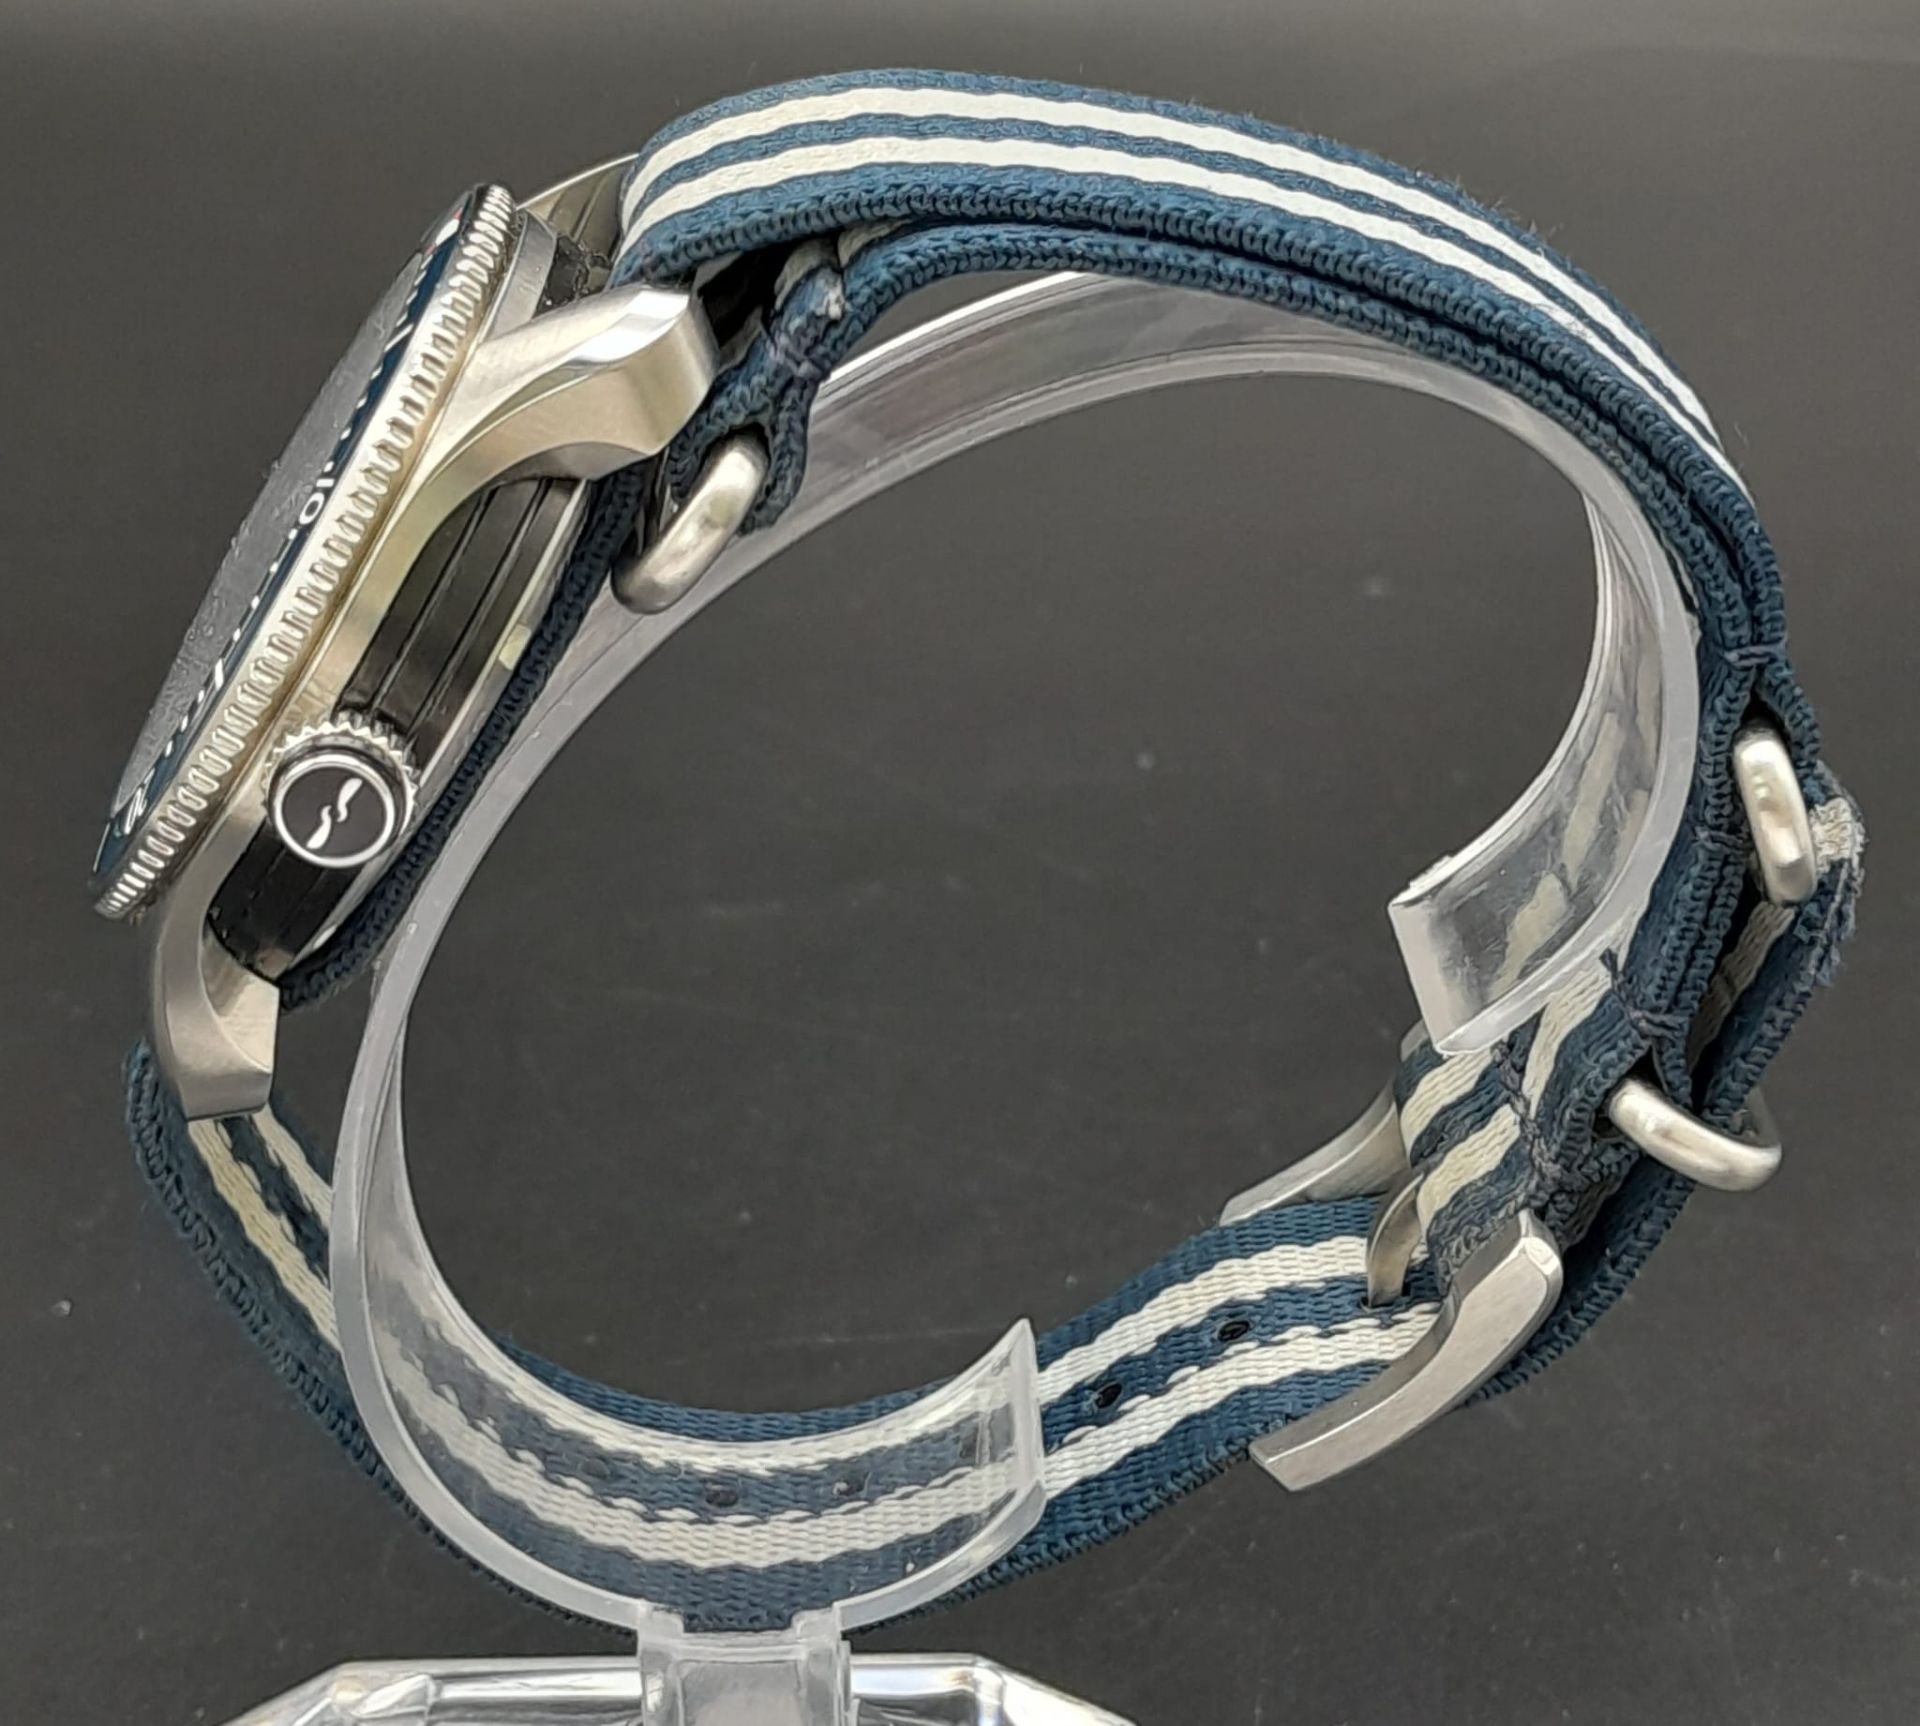 A Bremont Supermarine Karakoram Gents Watch. Striped textile Bremont strap. Stainless steel case - - Image 5 of 17